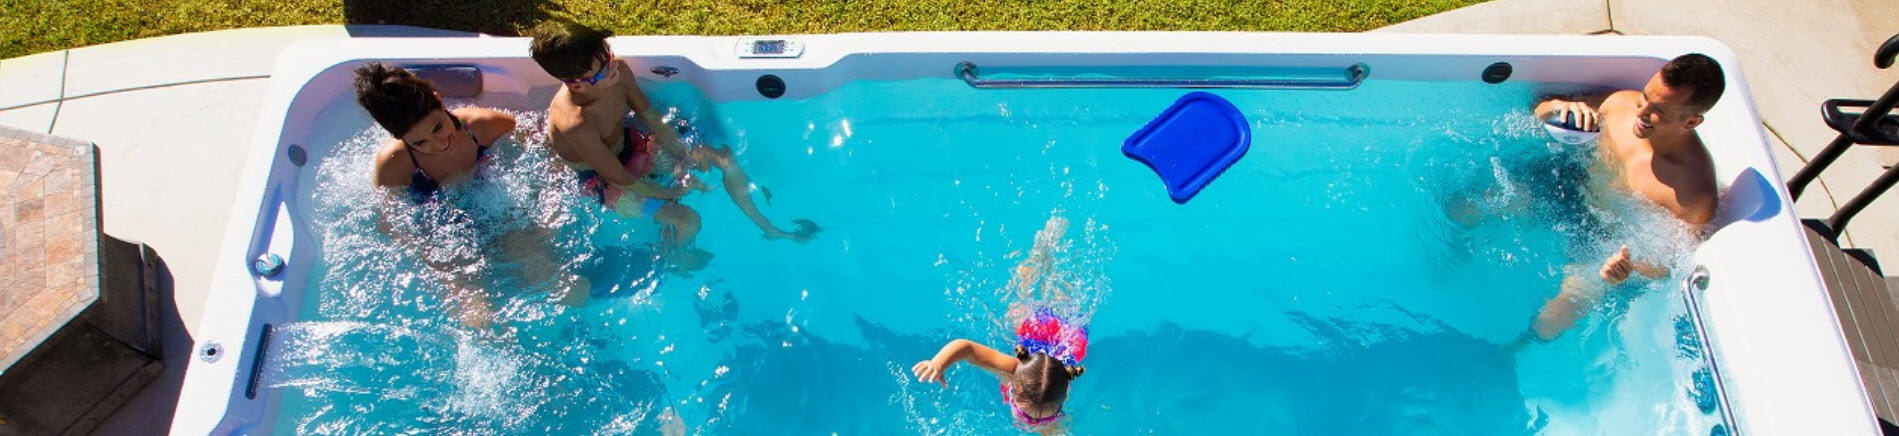 Improve Athletic Performance with a Lap Pool, Swim Spas for Sale Near Me Hillsboro